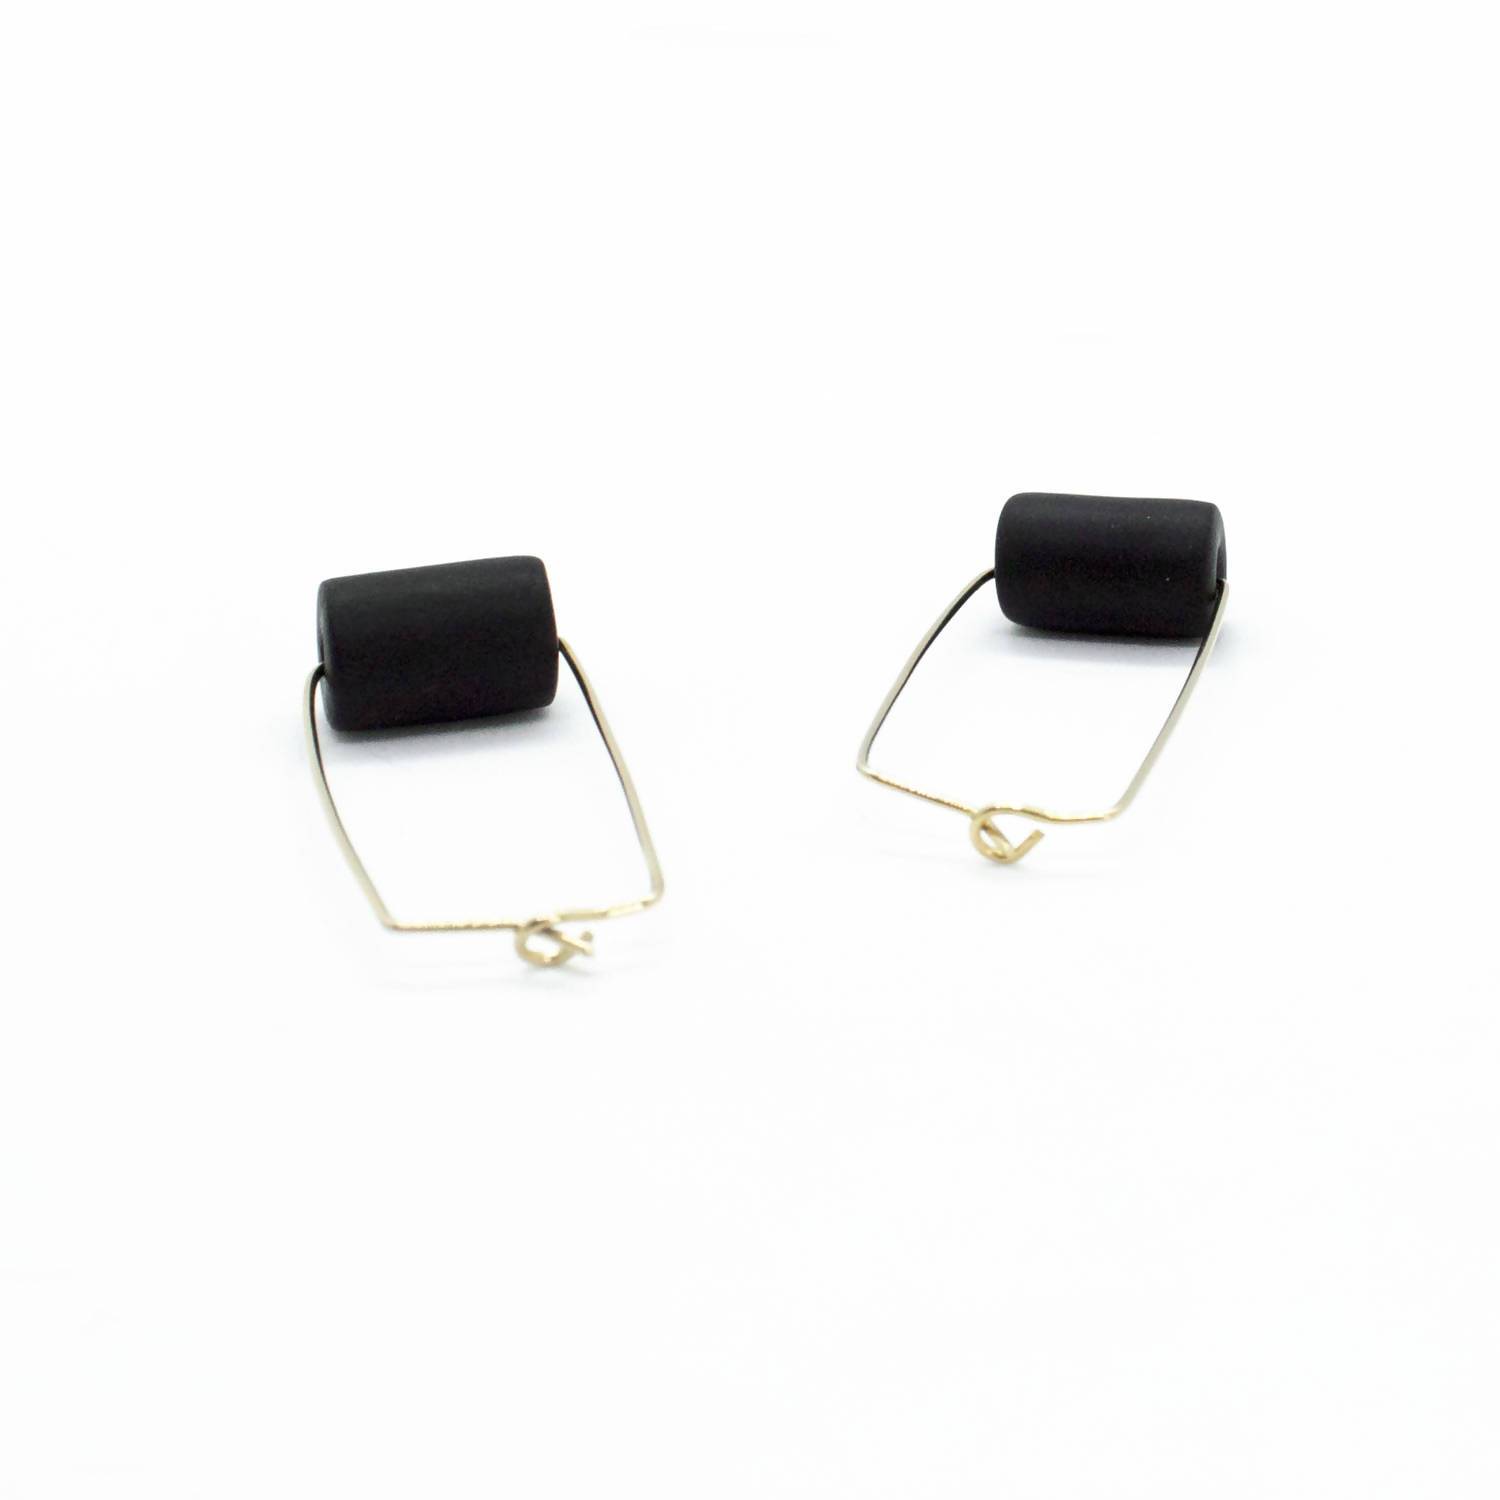 Gold Rectangle Earrings - Black Bead Earrings 5mm Paper 